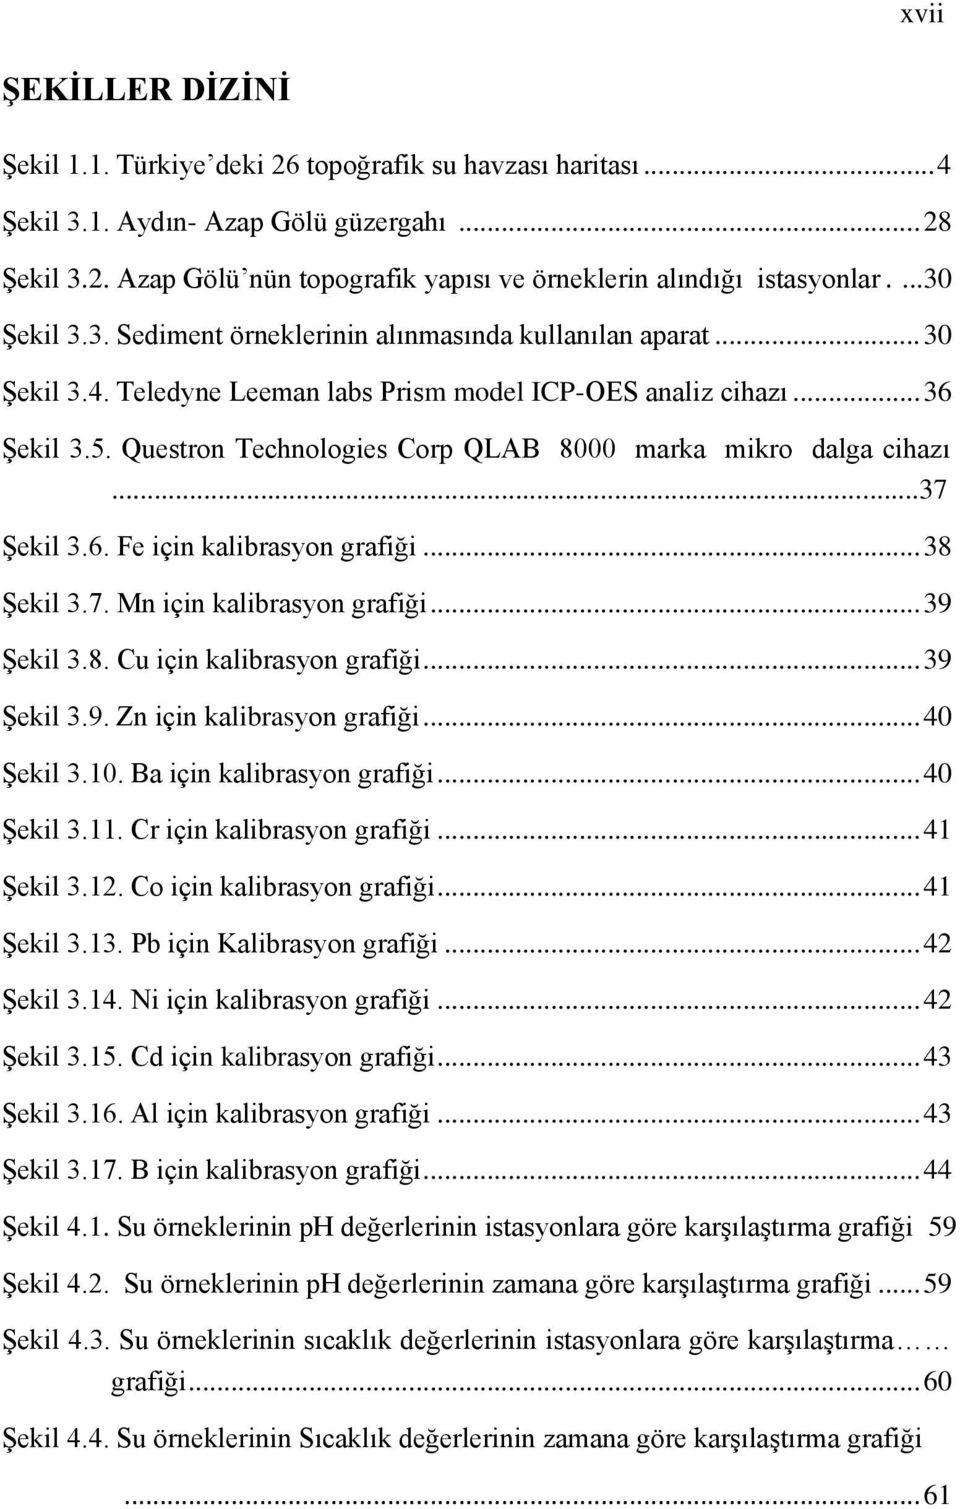 Questron Technologies Corp QLAB 8000 marka mikro dalga cihazı...37 Şekil 3.6. Fe için kalibrasyon grafiği... 38 Şekil 3.7. Mn için kalibrasyon grafiği... 39 Şekil 3.8. Cu için kalibrasyon grafiği.